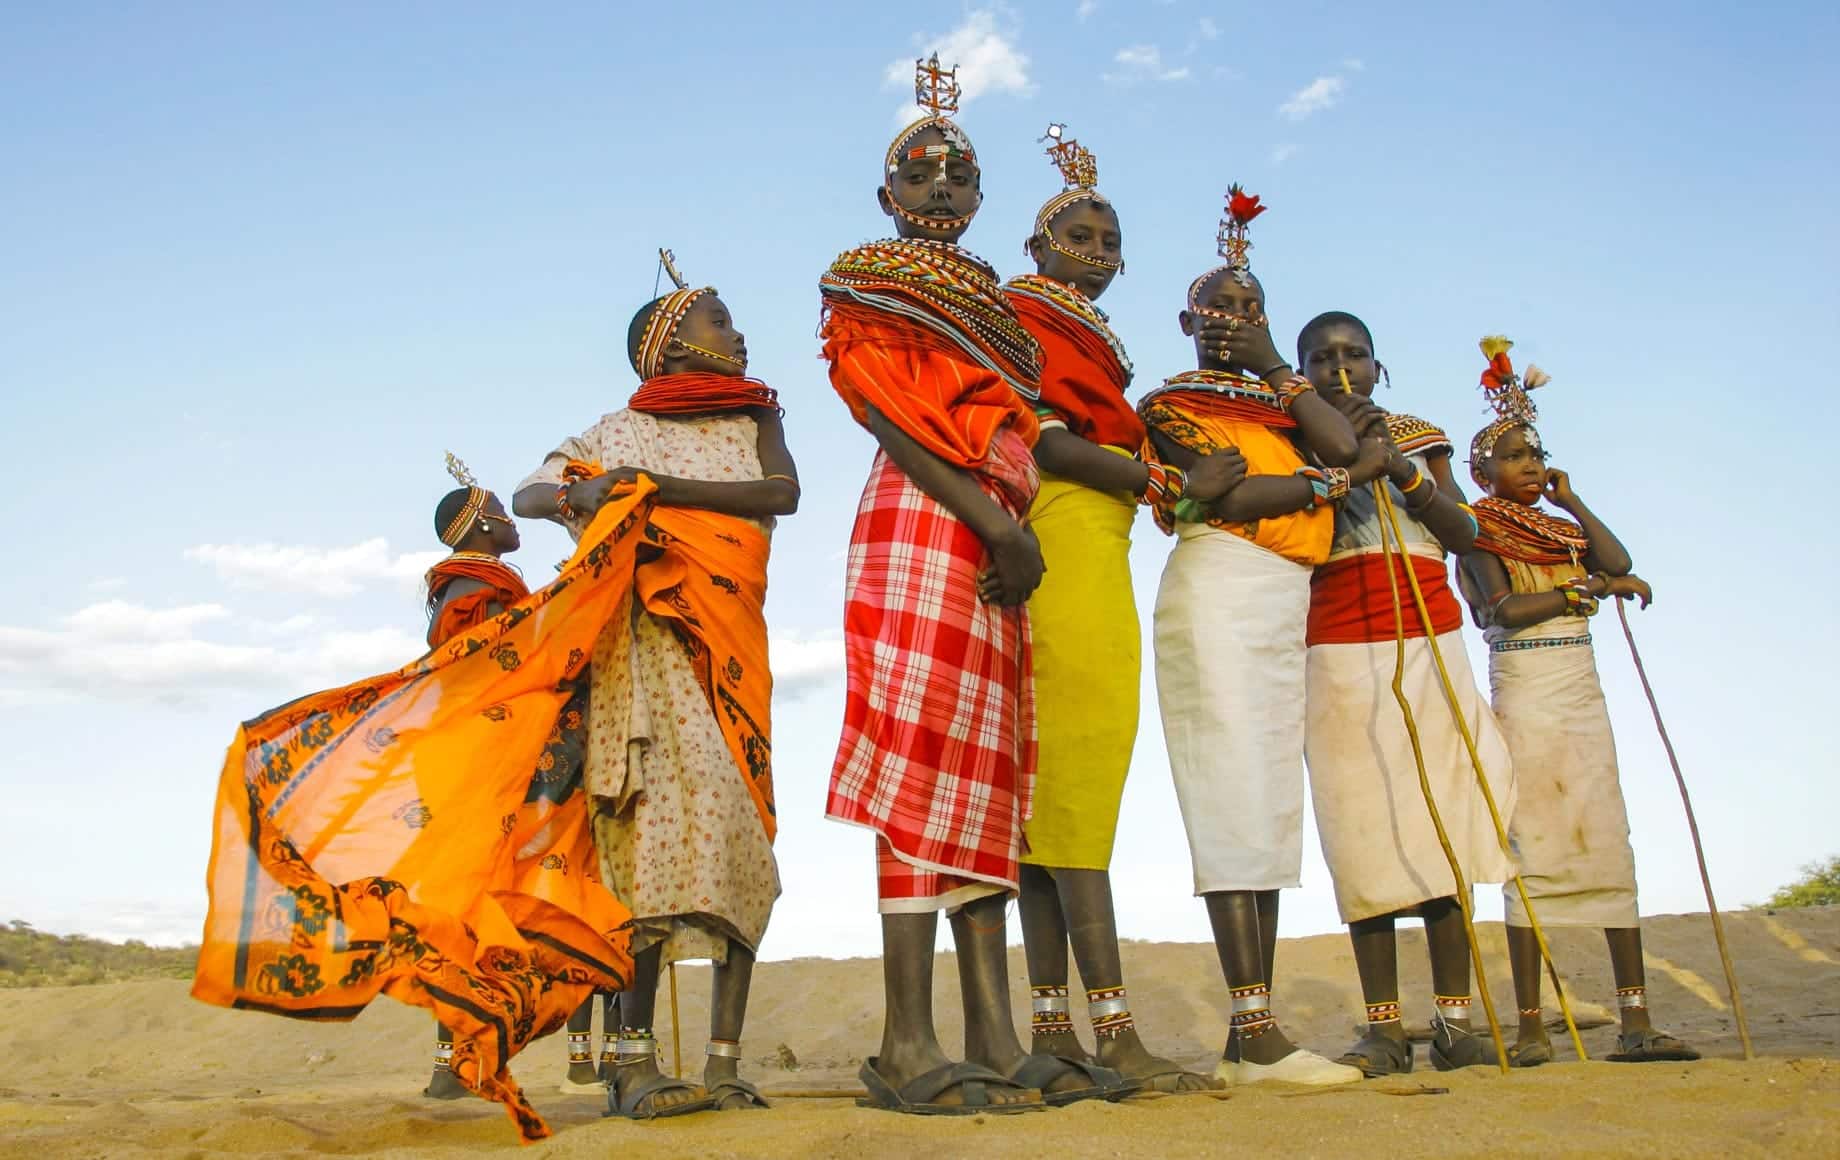 Tribe ladies with gorgeous clothing at Samburu National Reserve